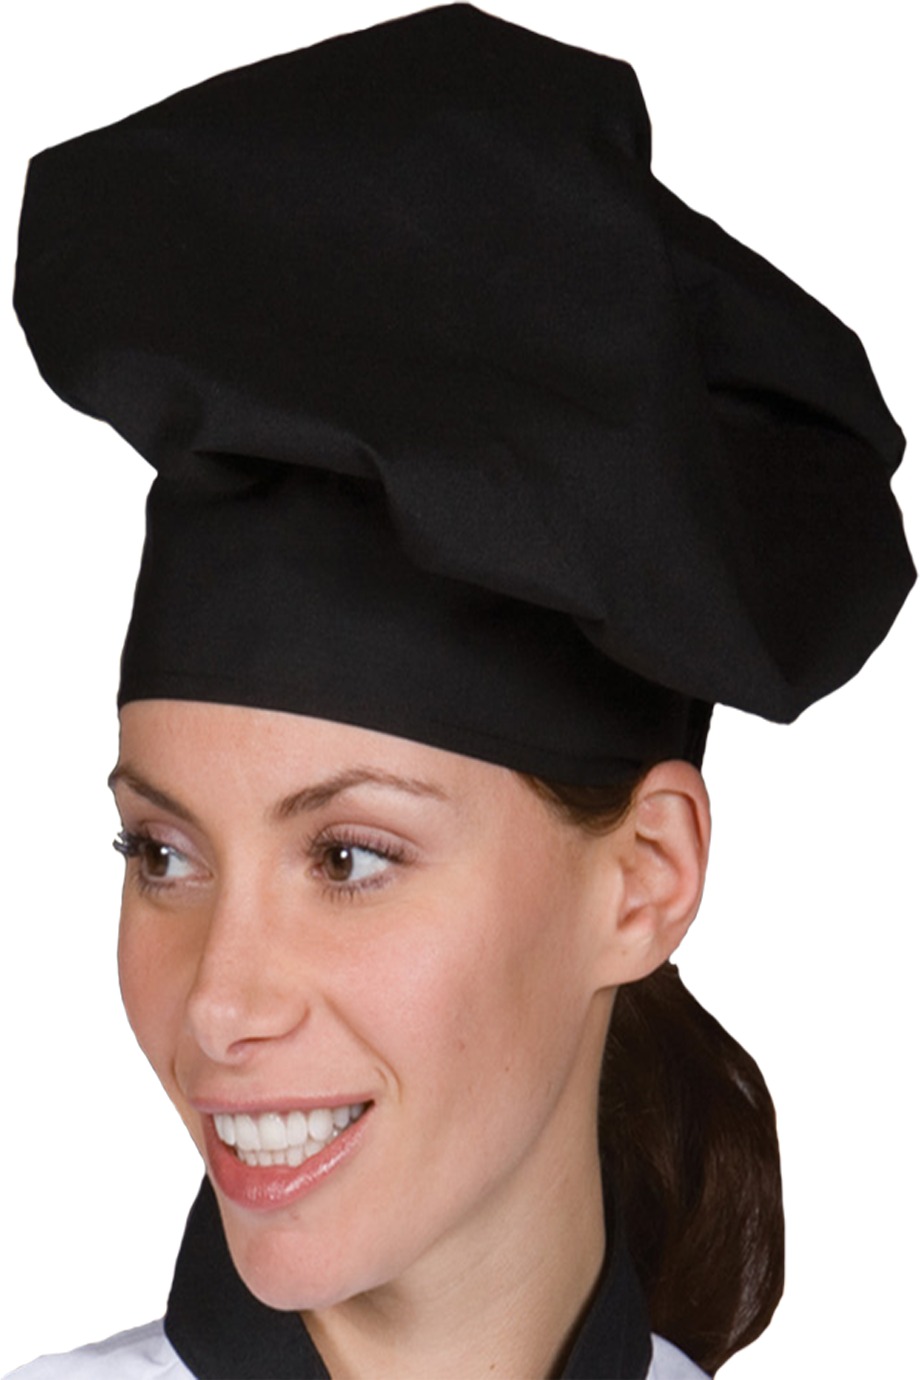 Edwards Garment HT00 - Poplin Chef Hat